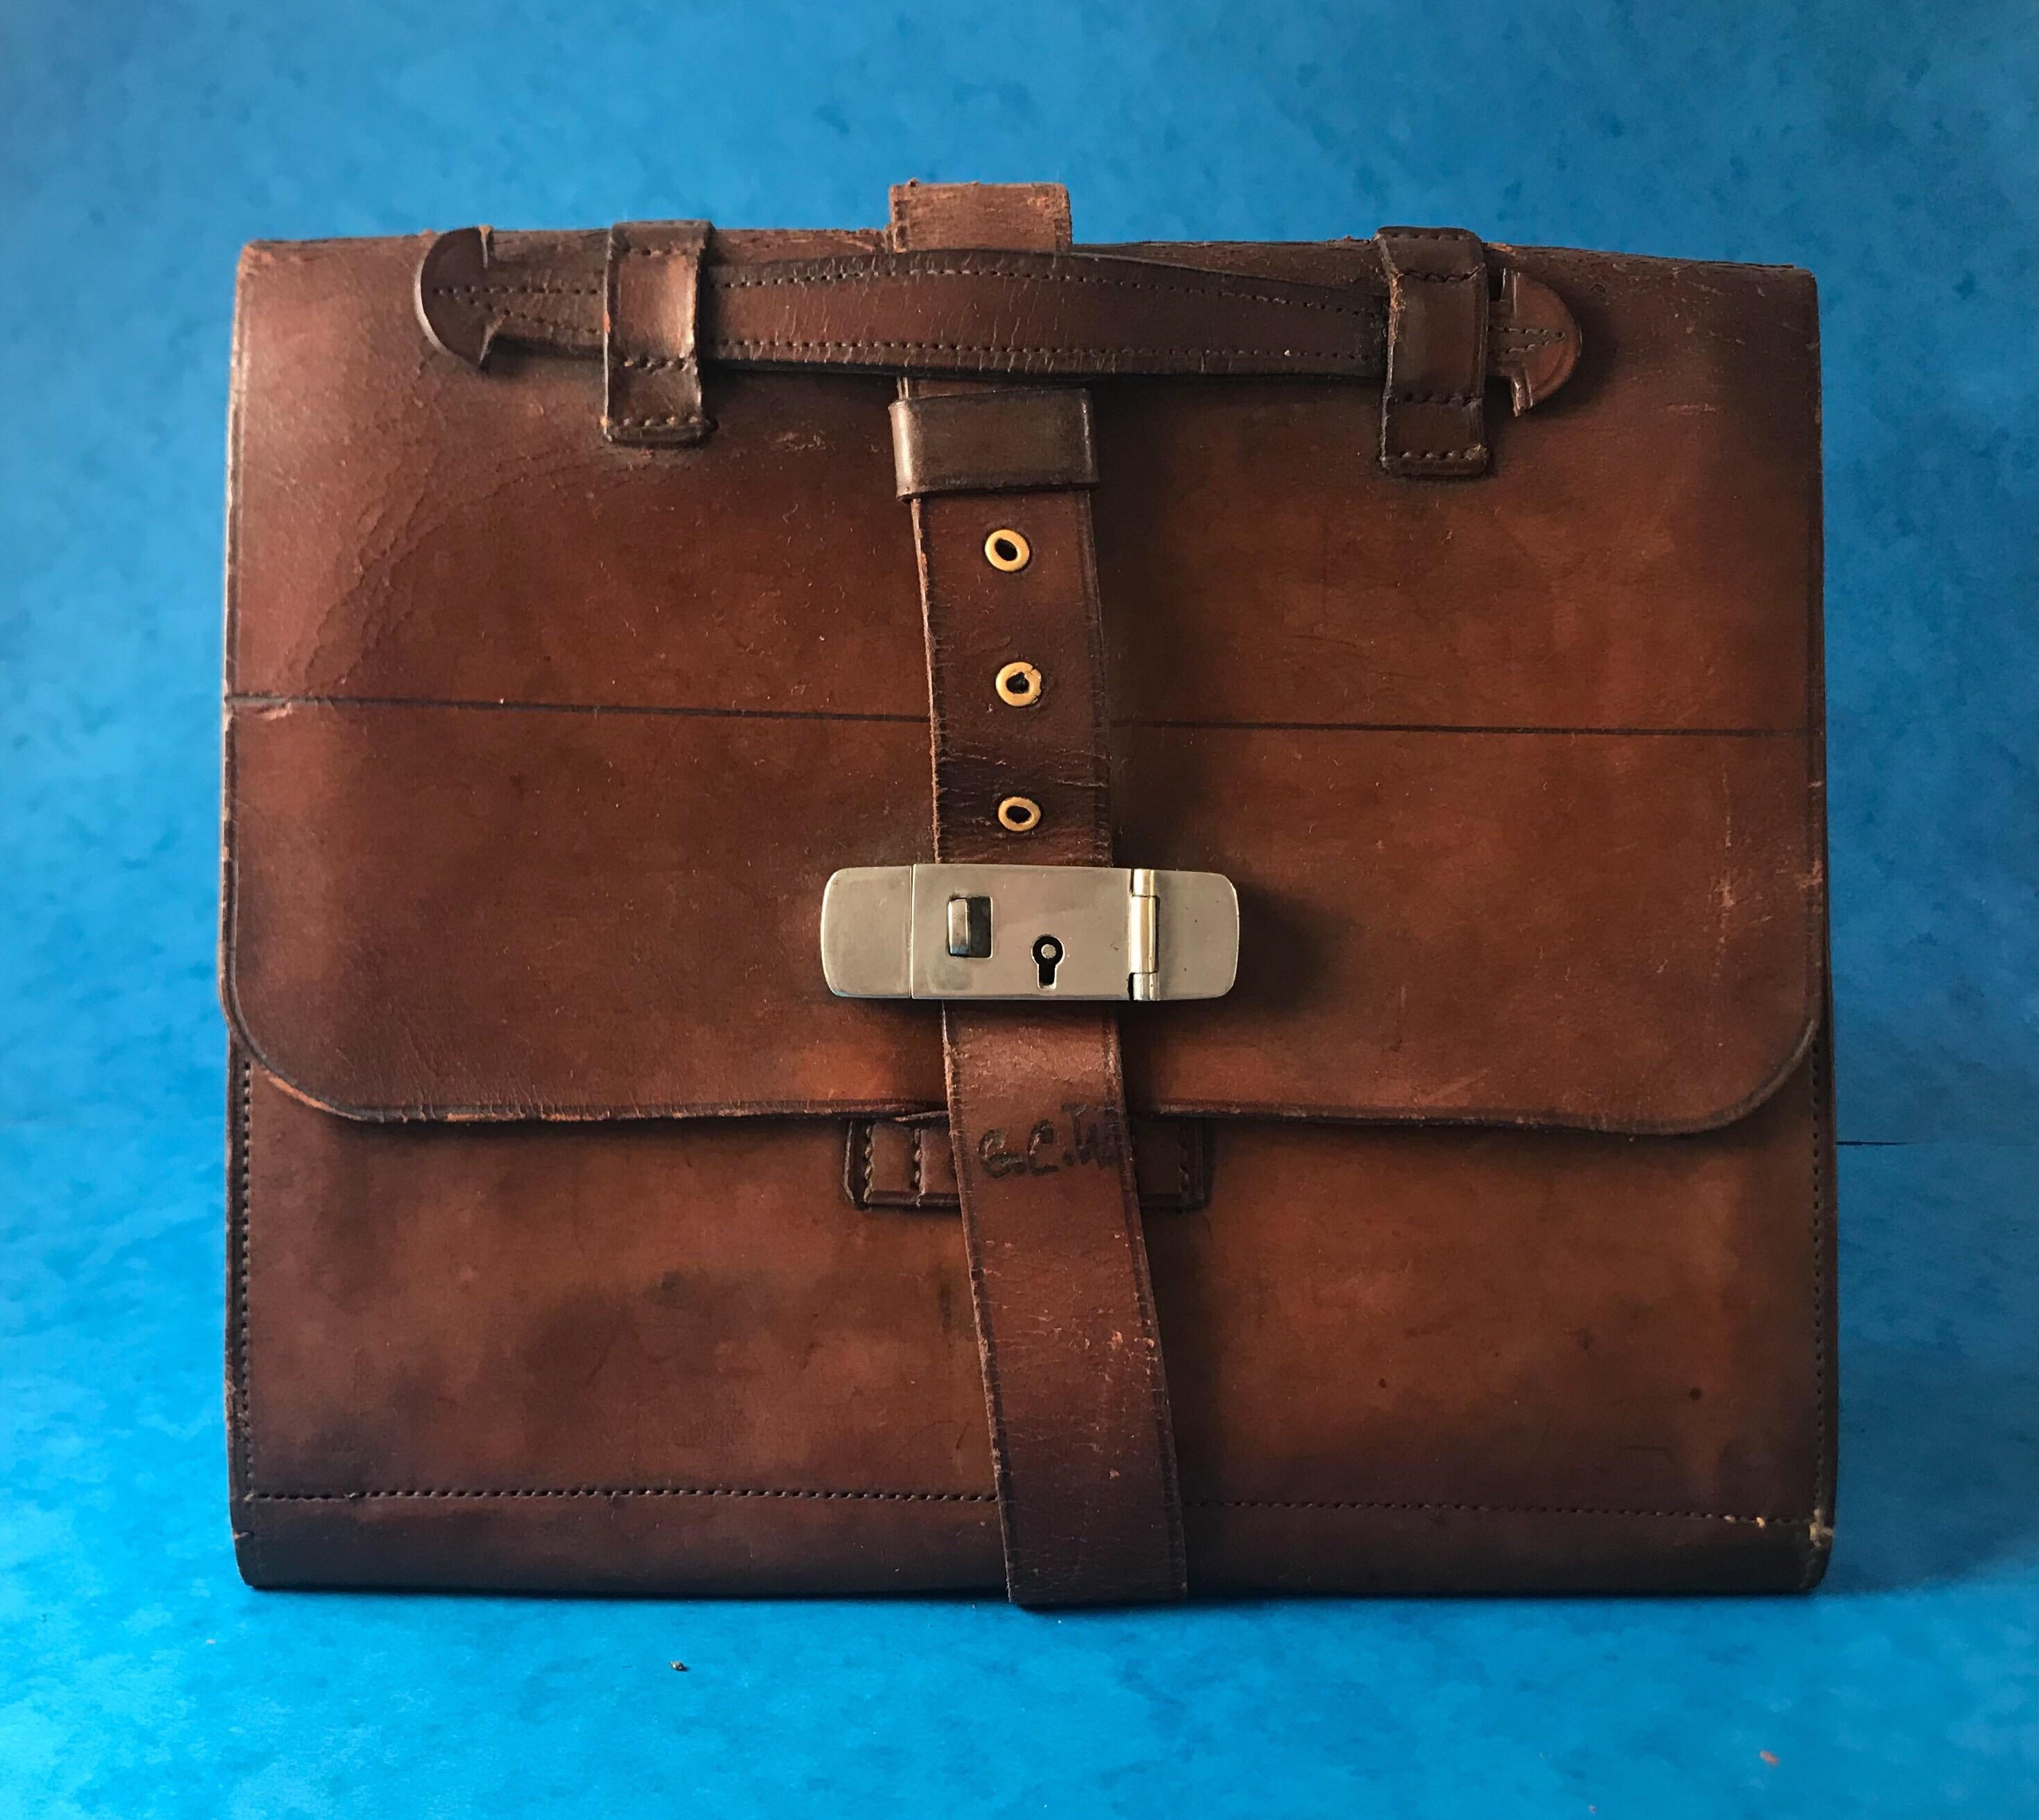 Attaché Leather case 7